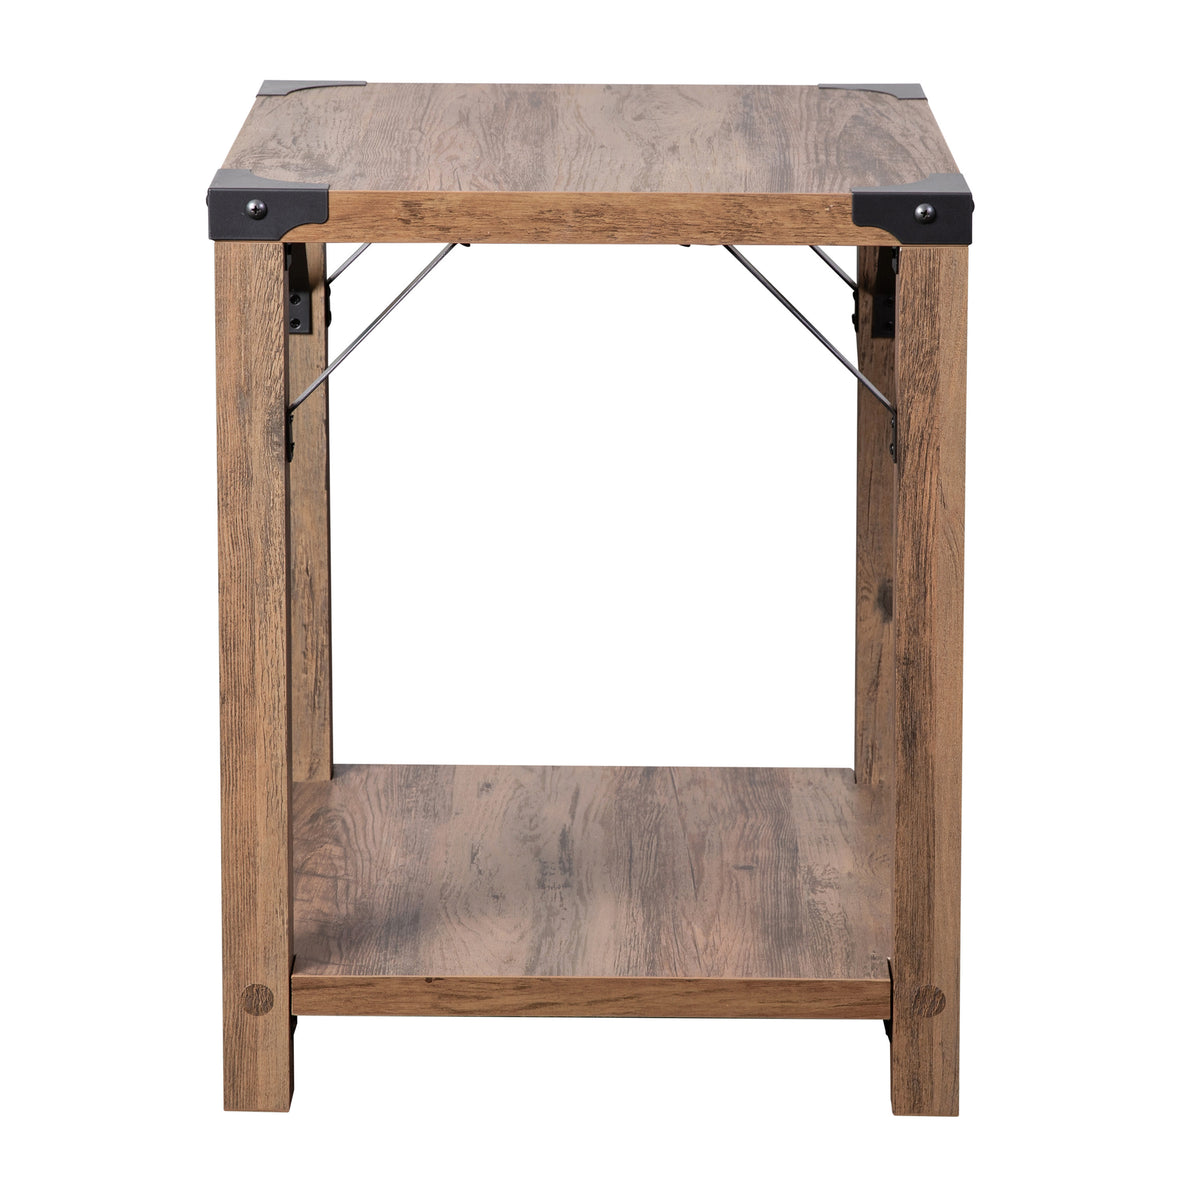 Rustic Oak |#| 2-Tier Side Table with Black Metal Side Braces and Corner Caps - Rustic Oak